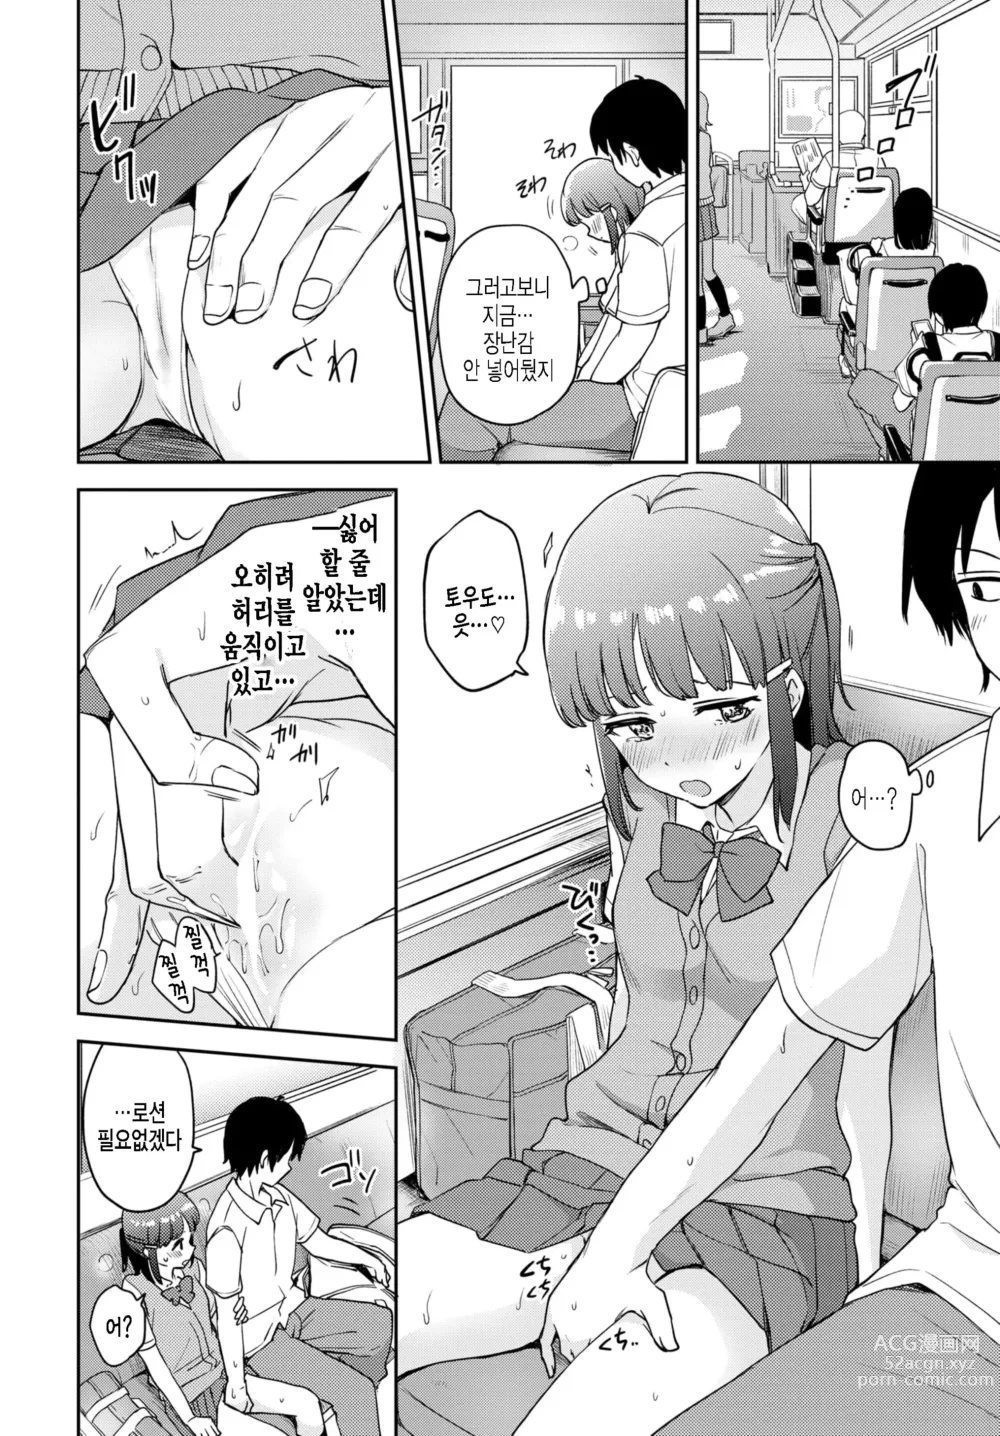 Page 12 of manga step by step